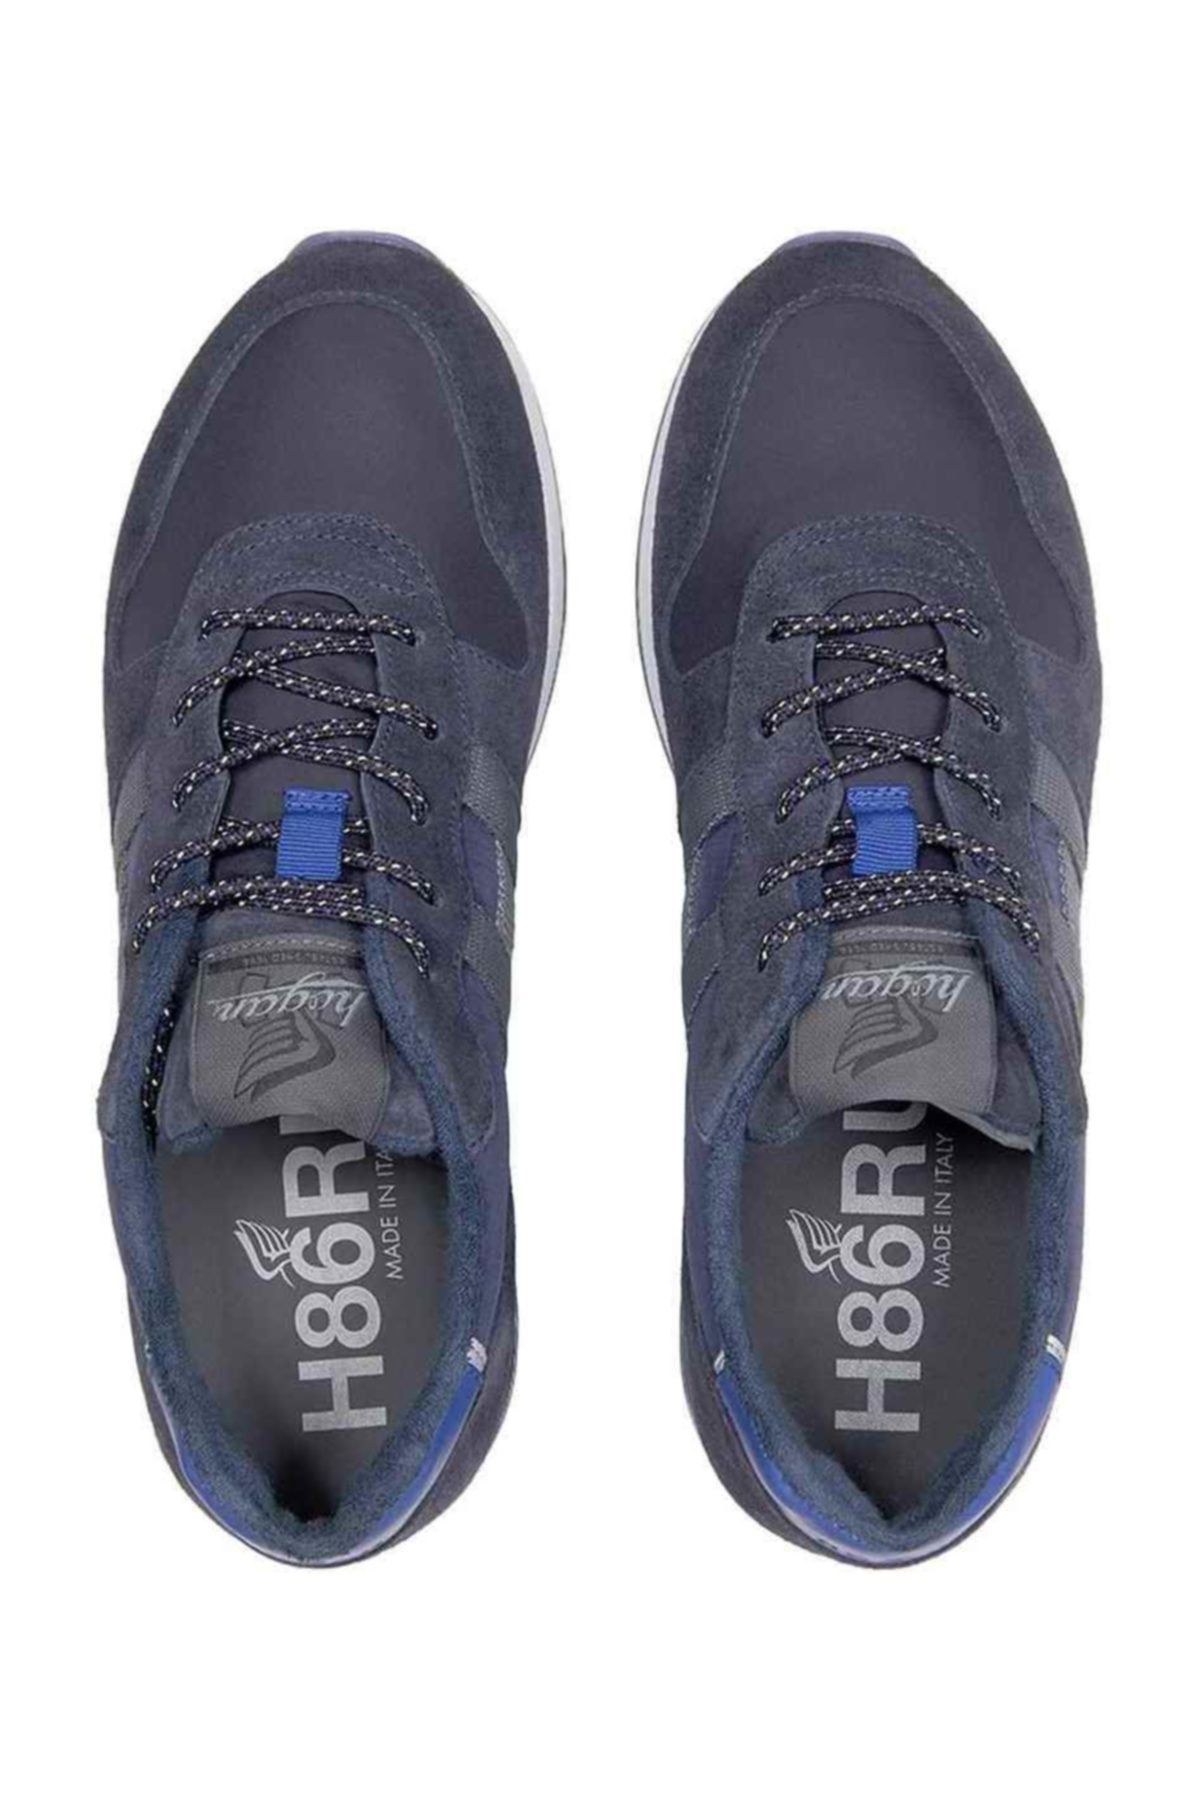 HOGAN H383 Sneaker Ayakkabı